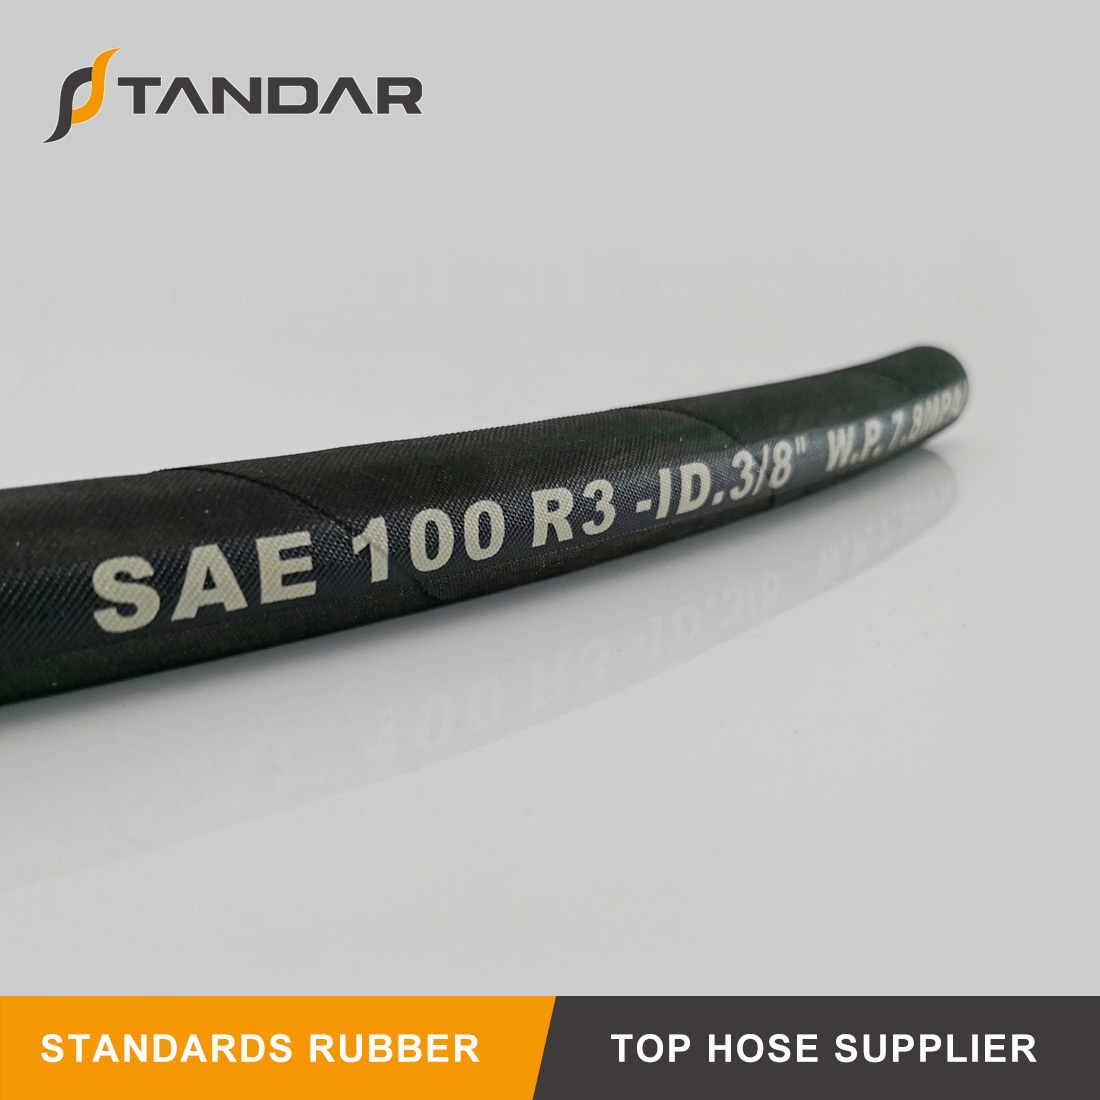 SAE J517-100 R3 High Pressure Textile Braided Reinforced Flexible Hydraulic Rubber Hose